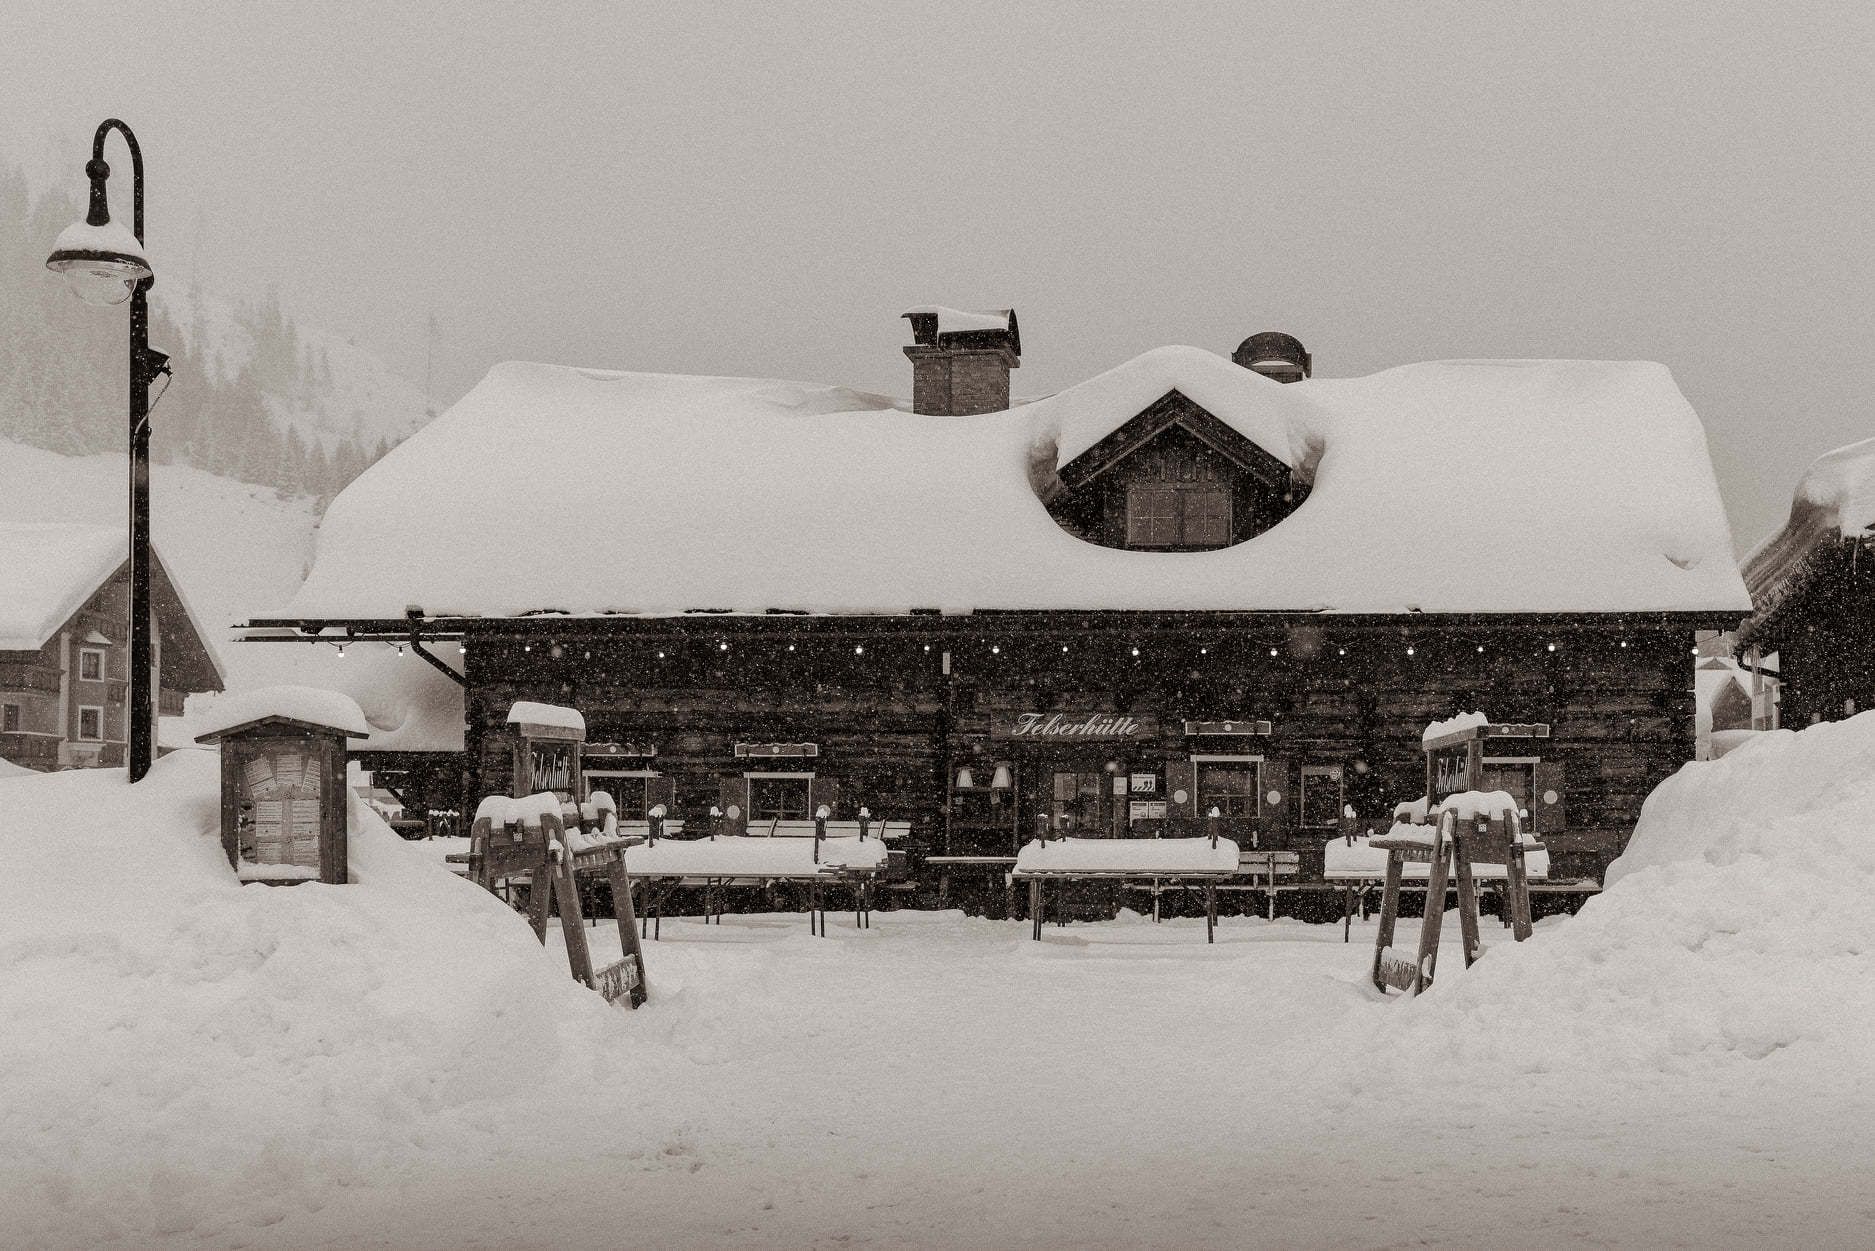 Already great conditions in Zauchensee (FB Zauchensee Skiparadies)